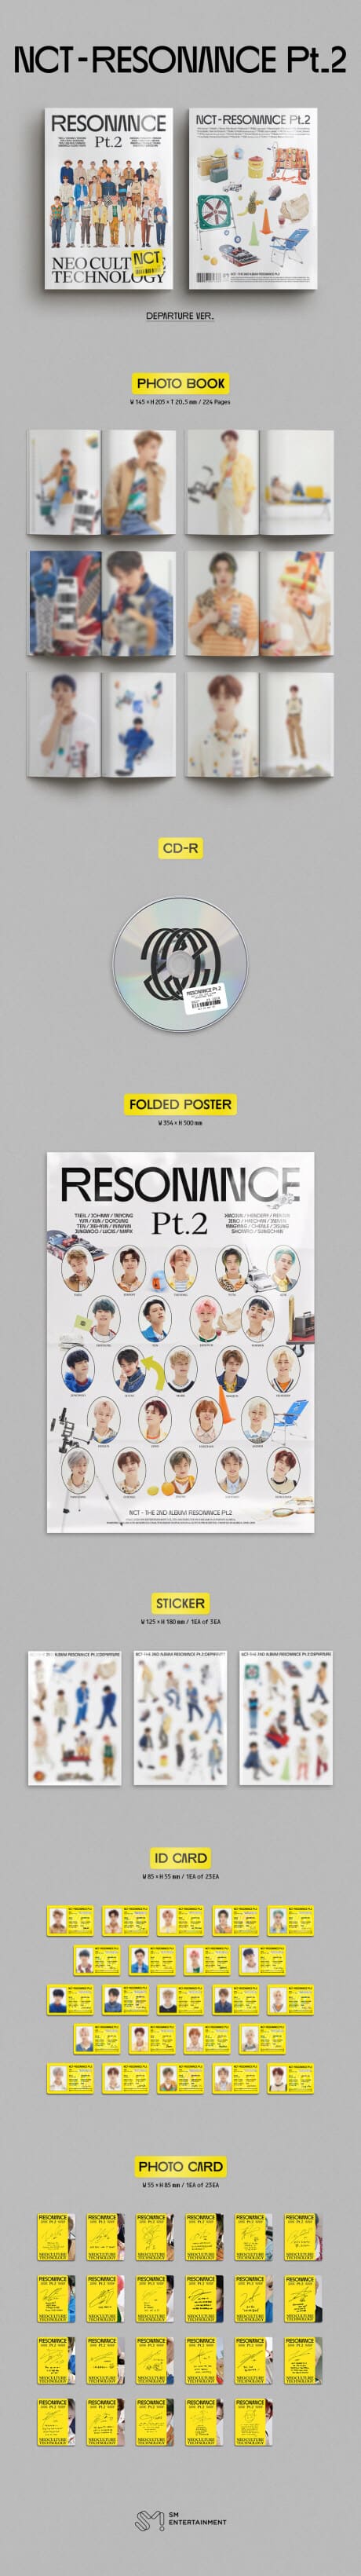 NCT - RESONANCE Pt.2 [The 2nd Album] Departure Ver.